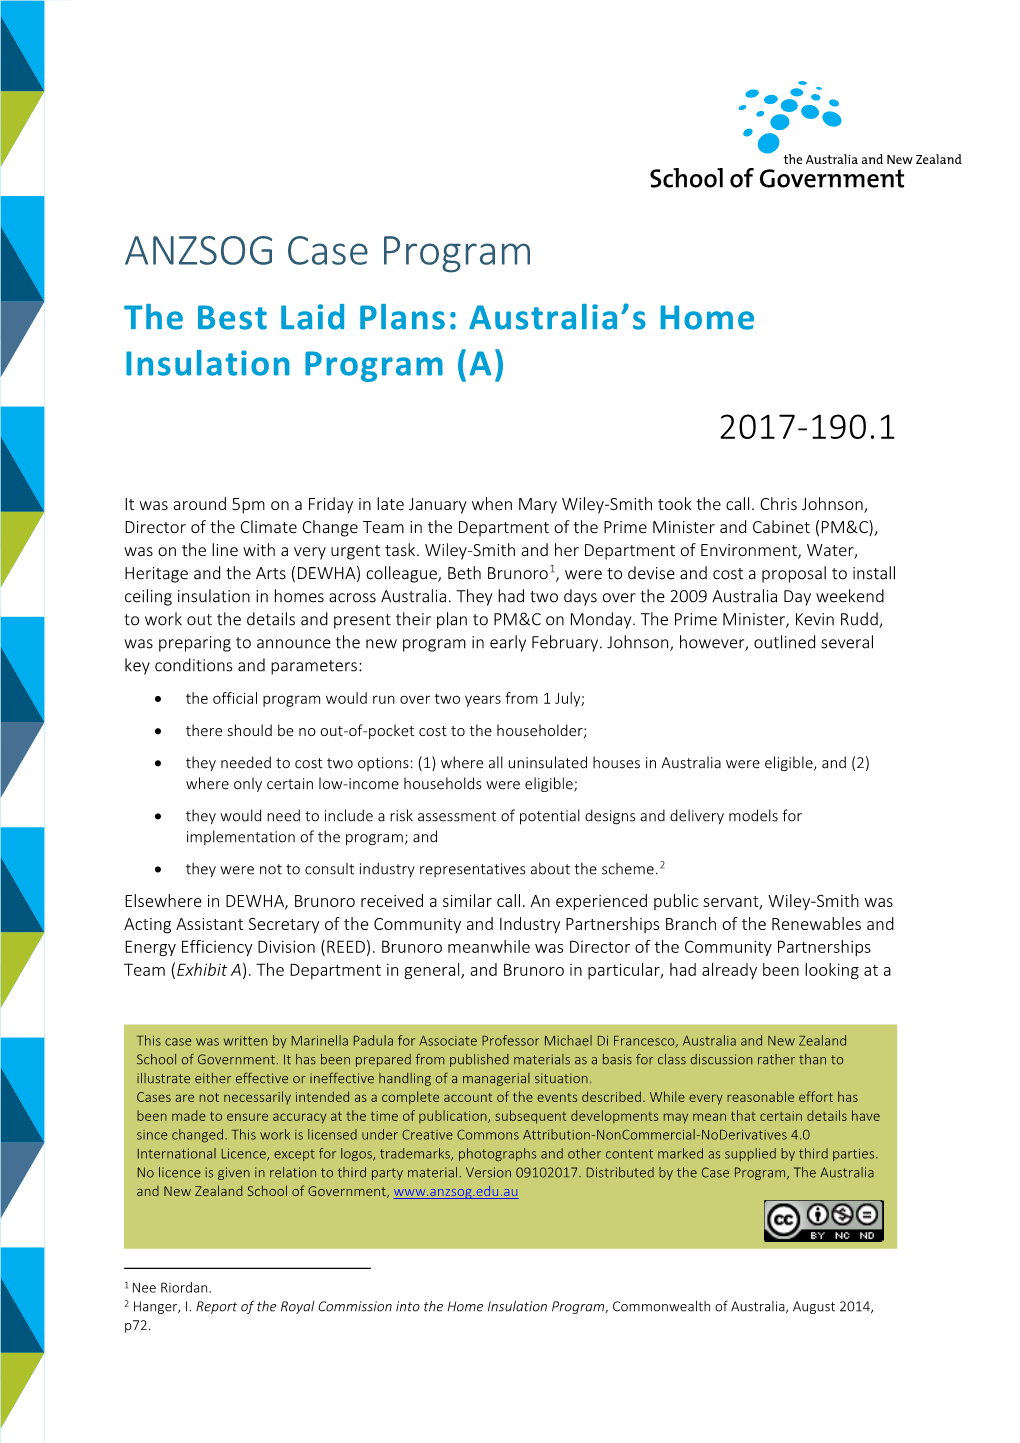 Australia's Home Insulation Program